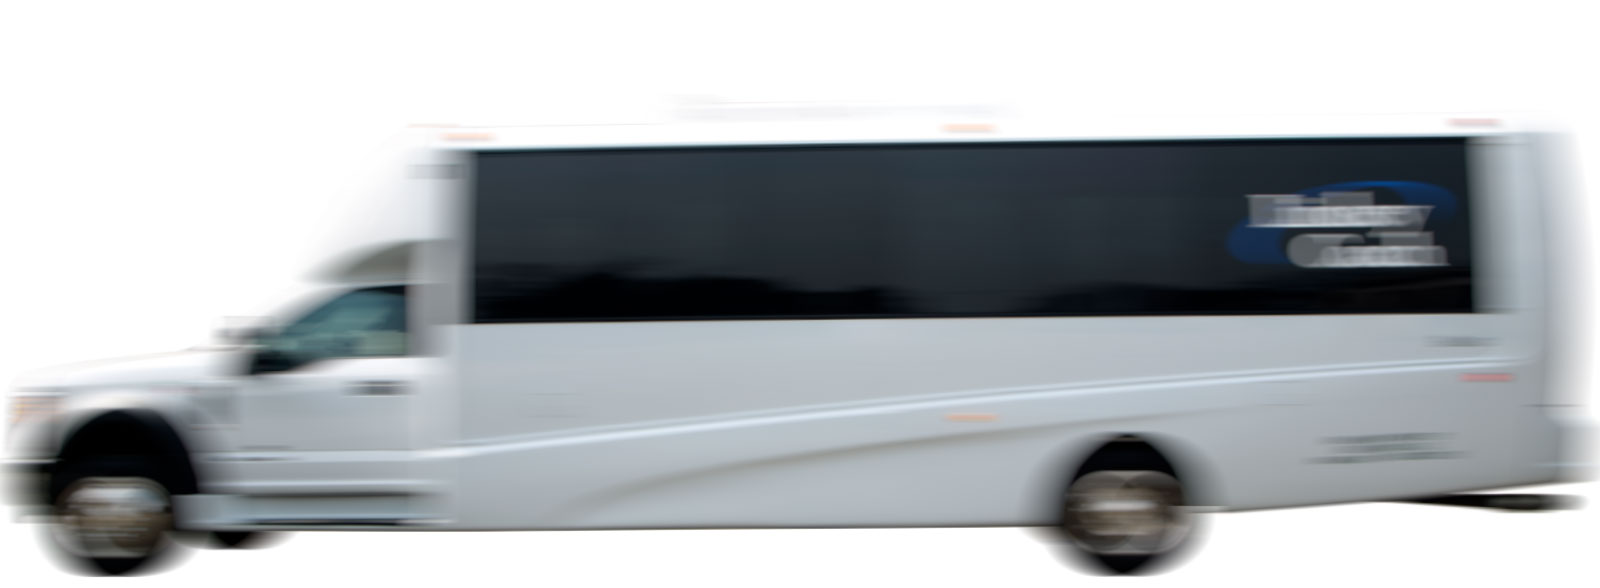 Passenger Bus